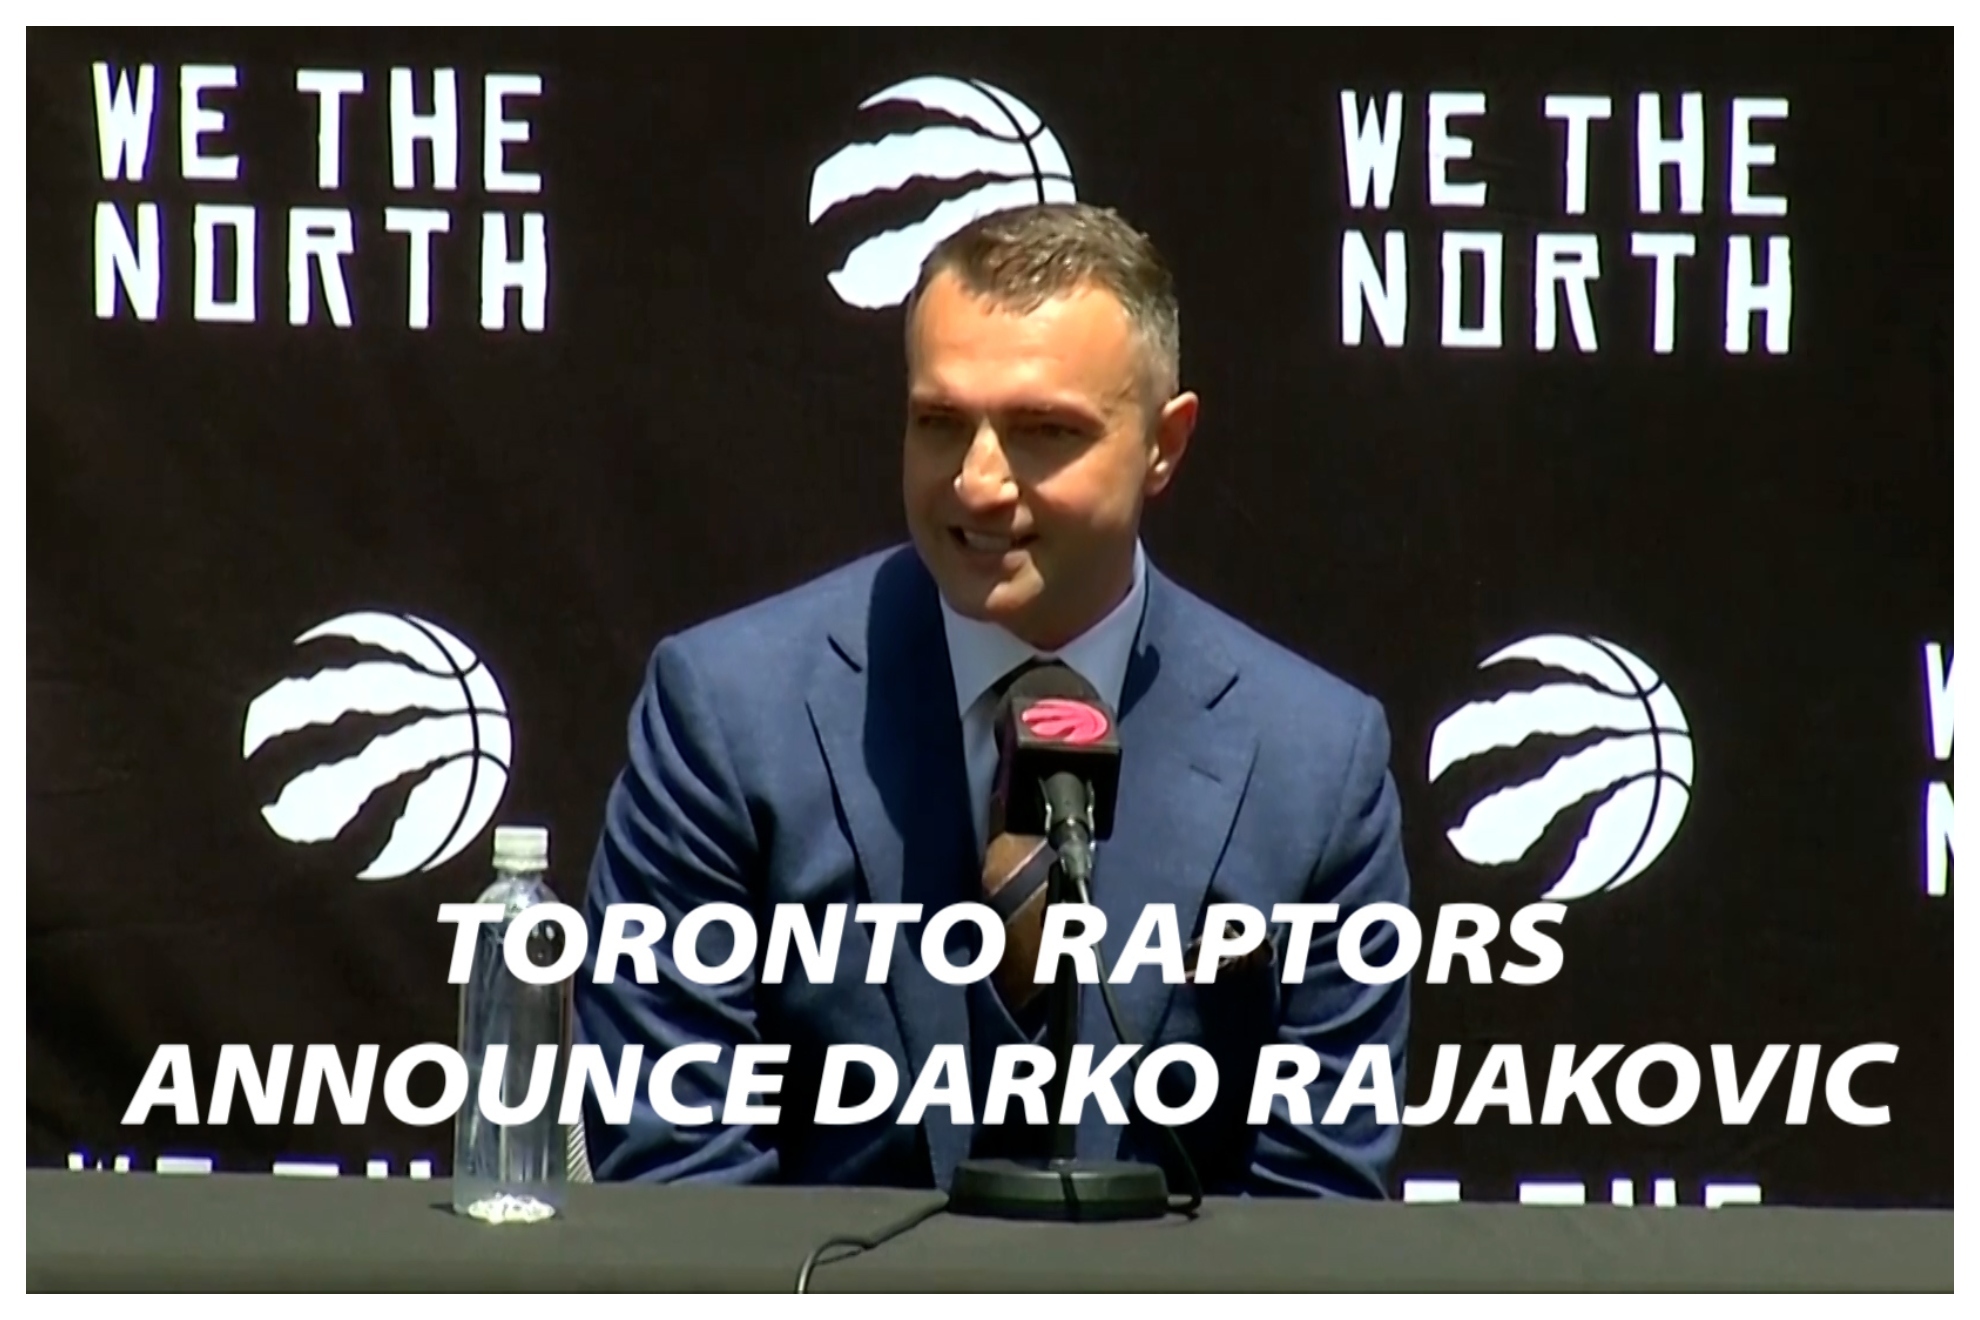 Darko Rajakovic announced as Toronto Raptors new head coach